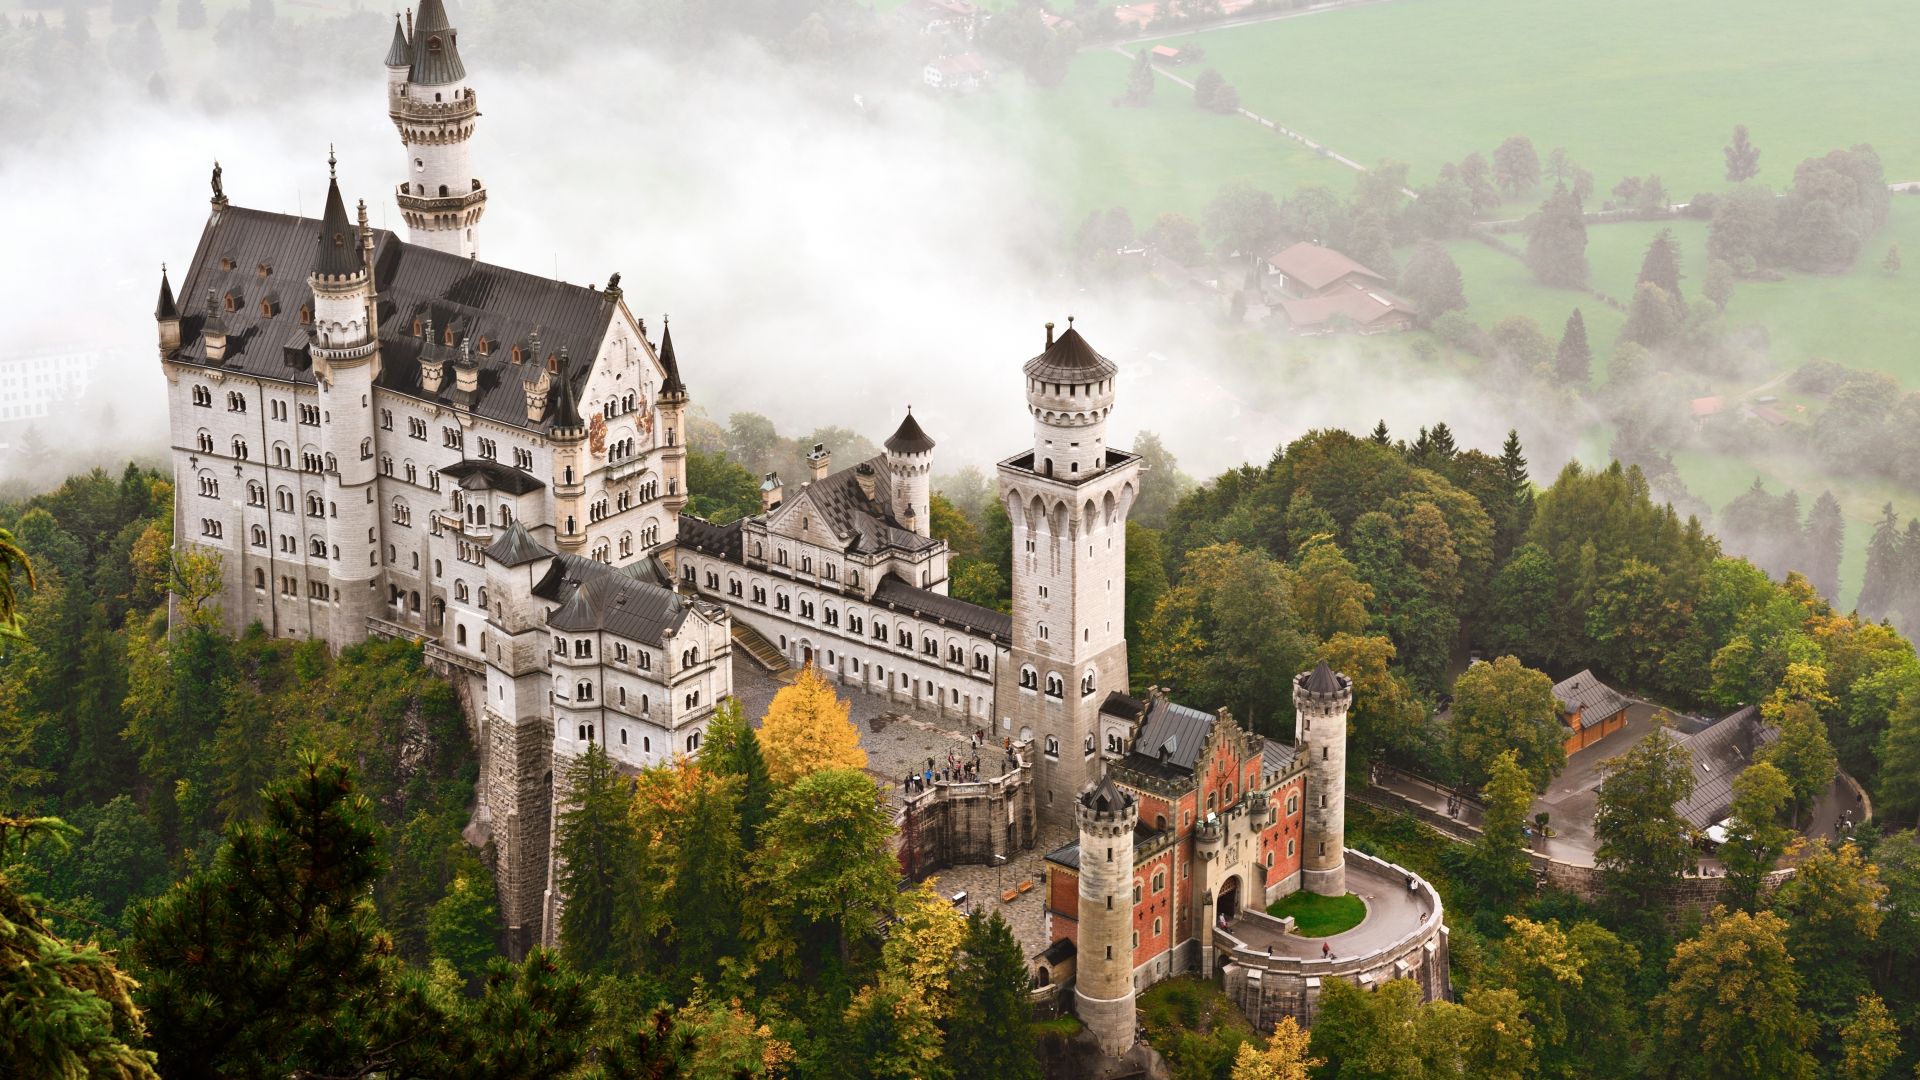 Neuschwanstein castle, Bavaria, Germany, tourism, travel (horizontal)